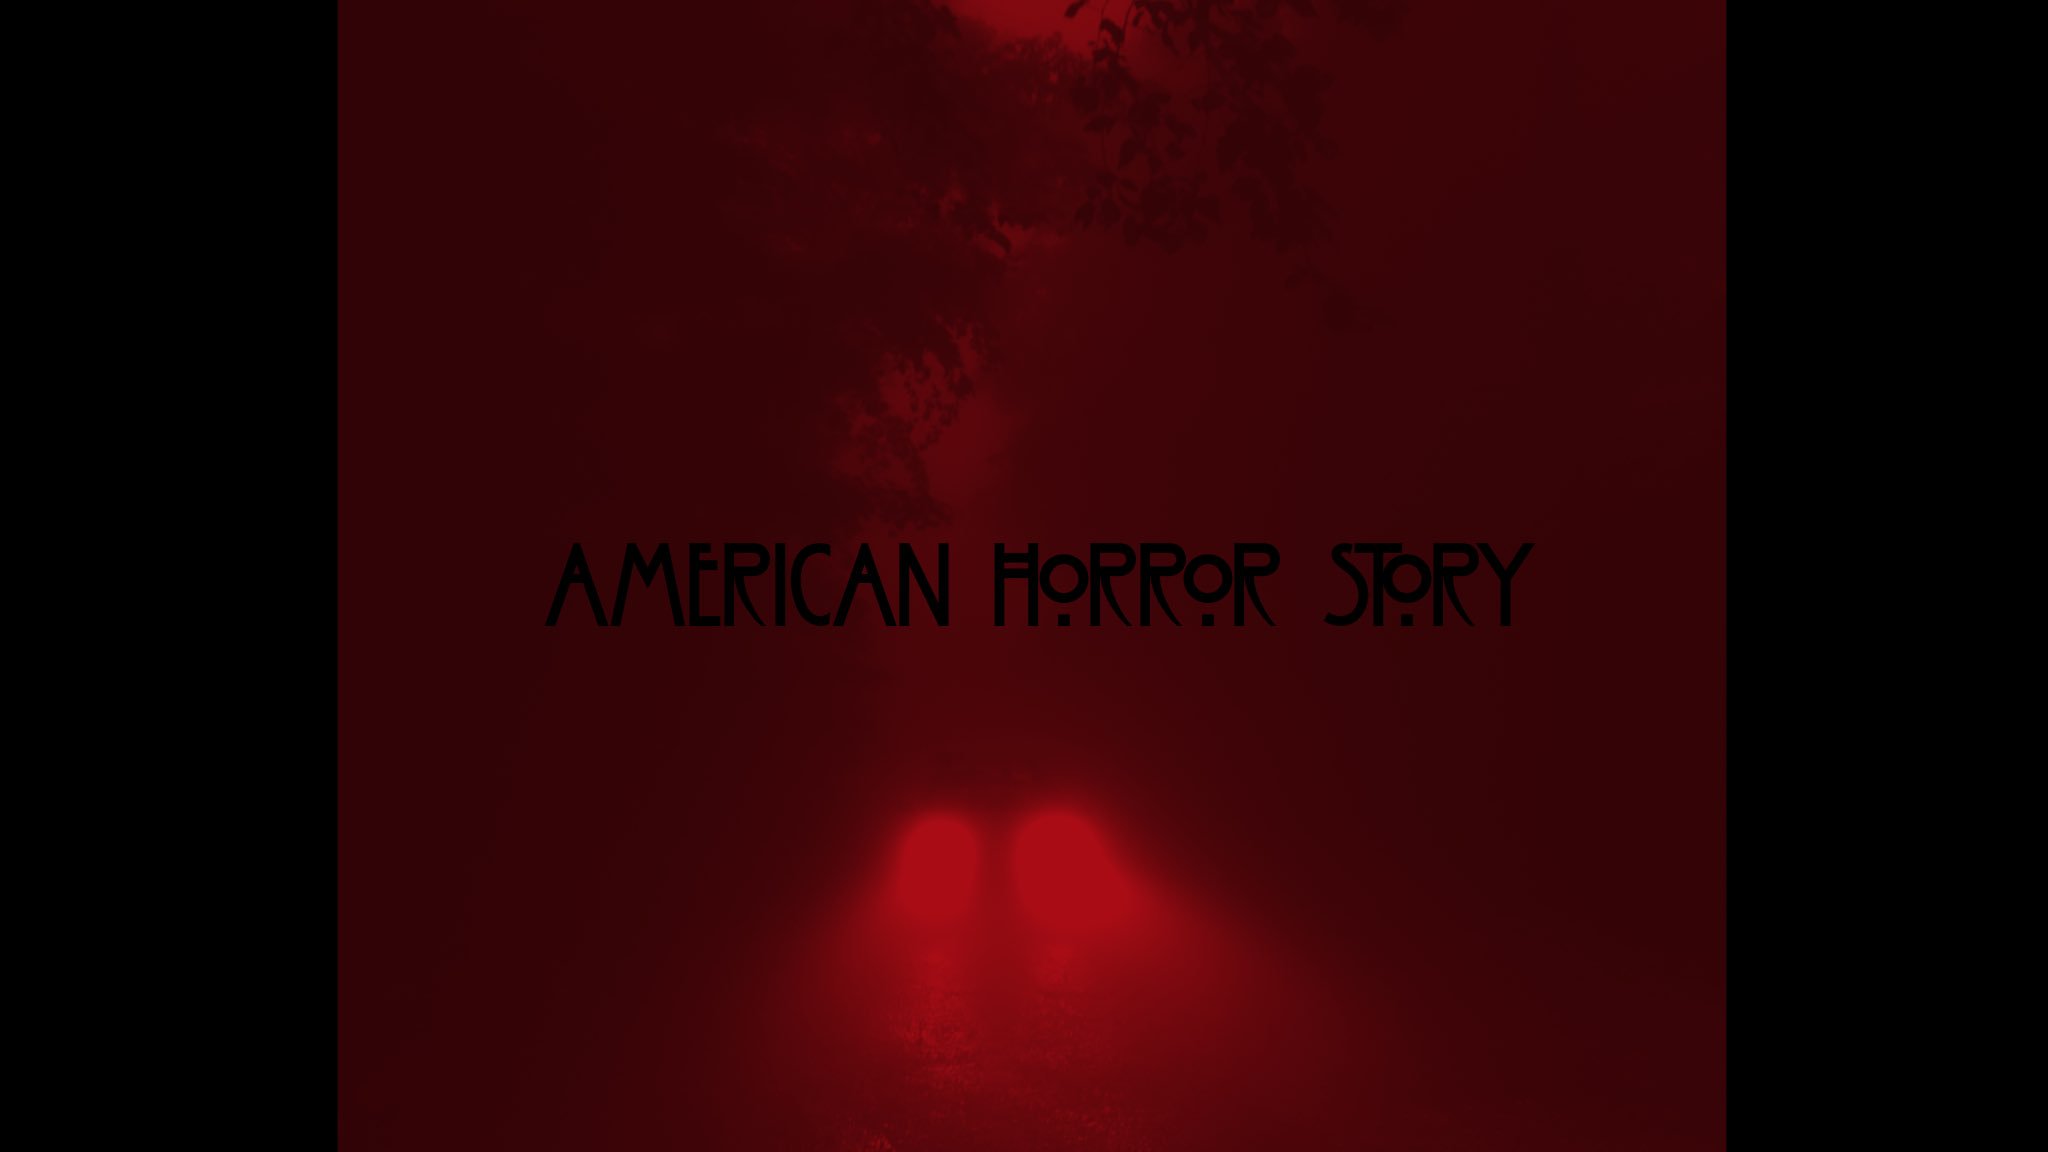 American Horror Story Season 9